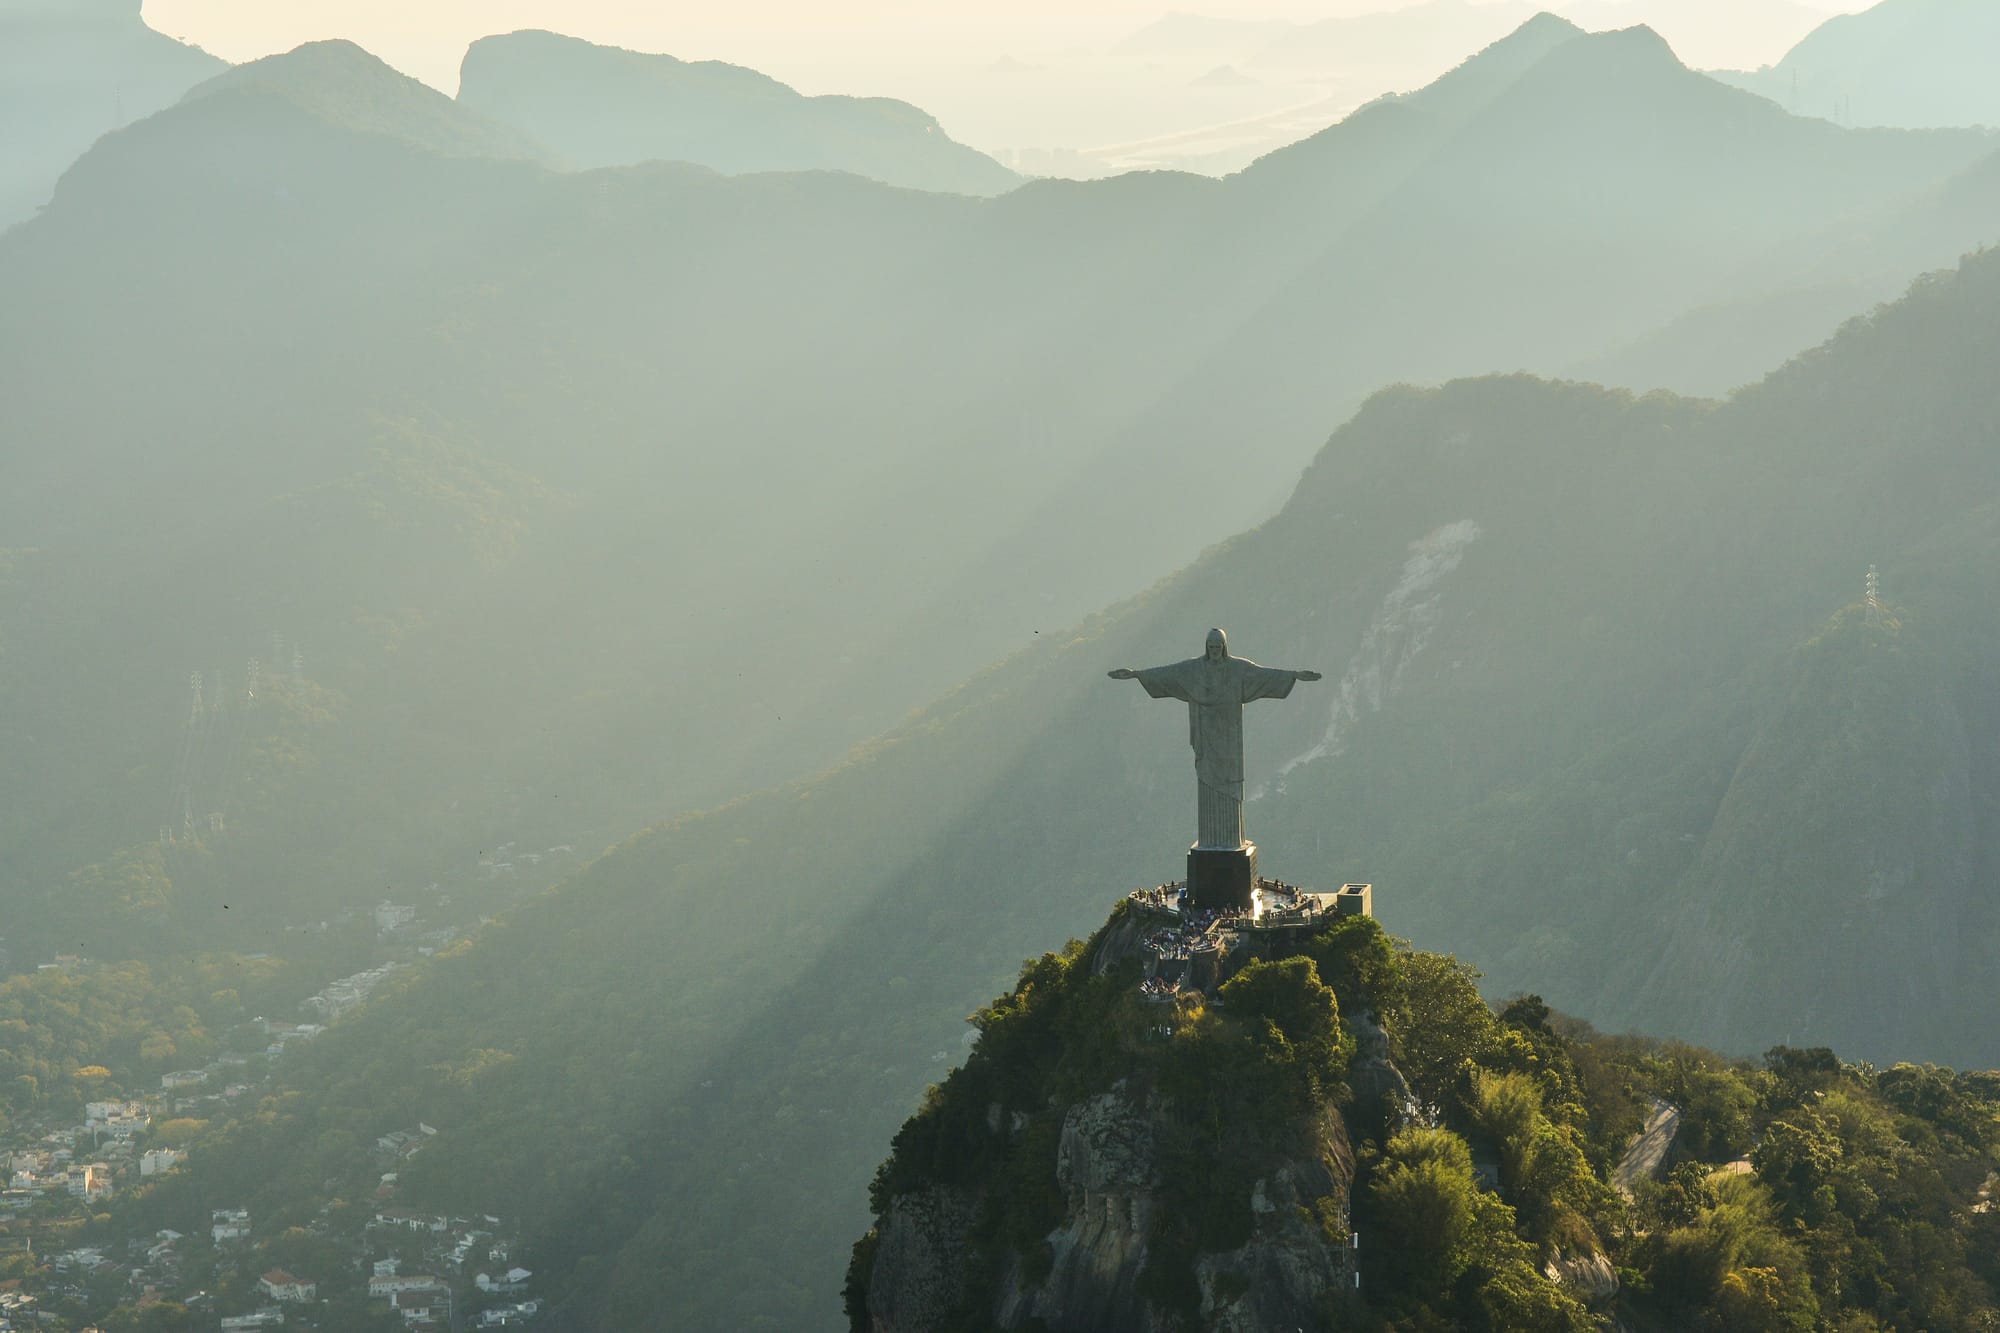 Brazil: Digital Finance at the Speed of Light